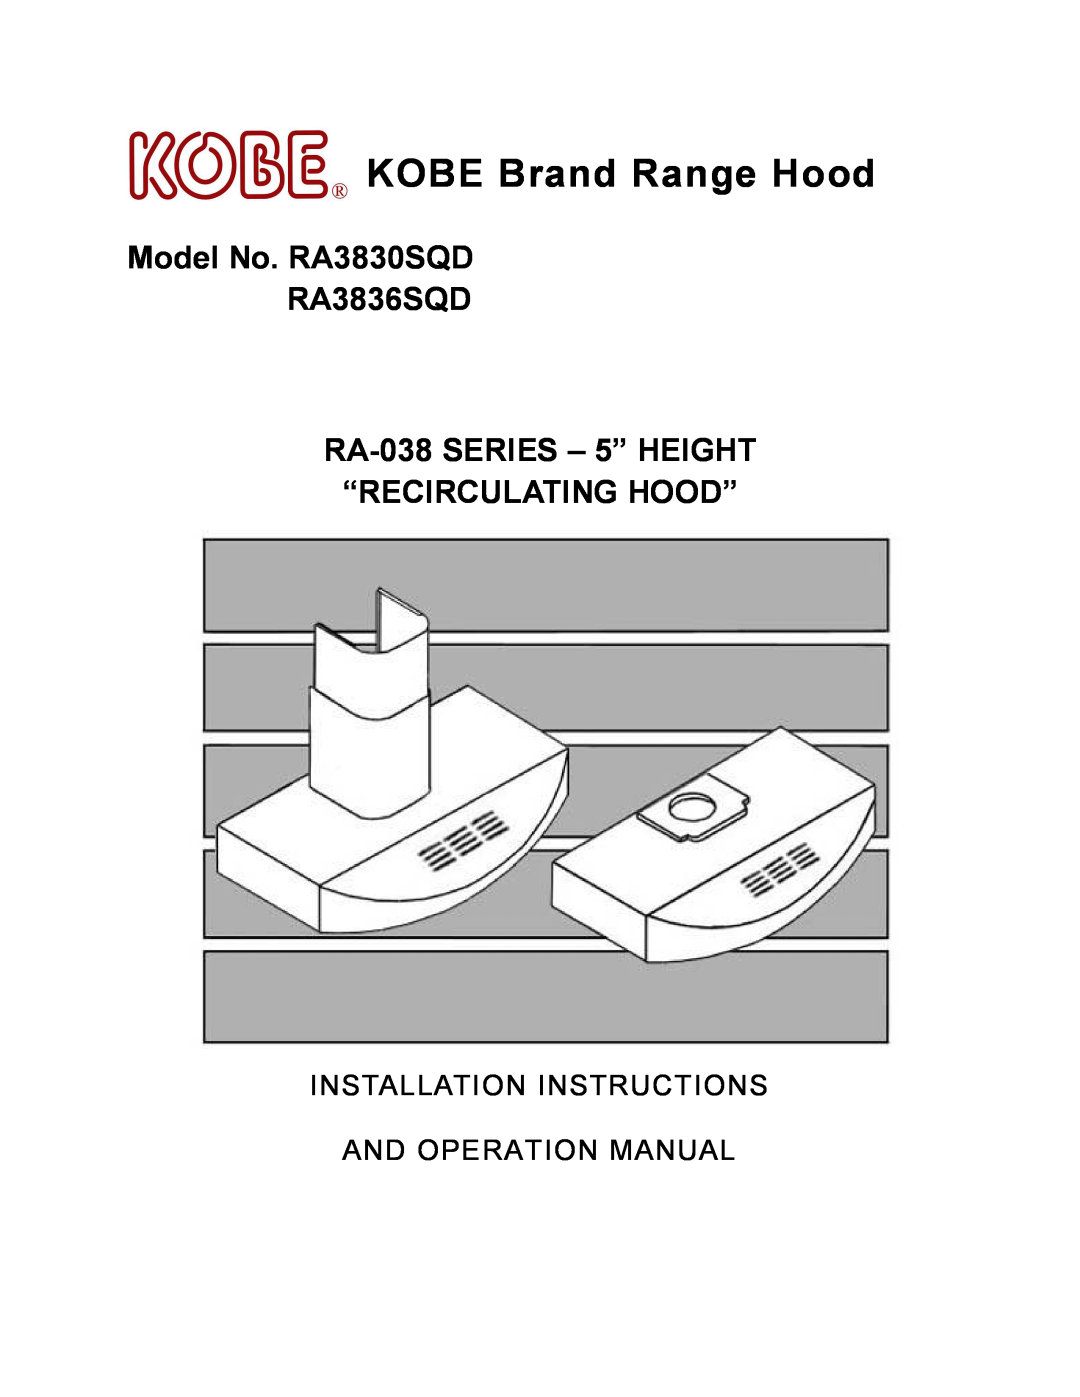 Kobe Range Hoods manual KOBE Brand Range Hood, Model No. RA3830SQD RA3836SQD, RA-038 SERIES 5 HEIGHT RECIRCULATING HOOD 